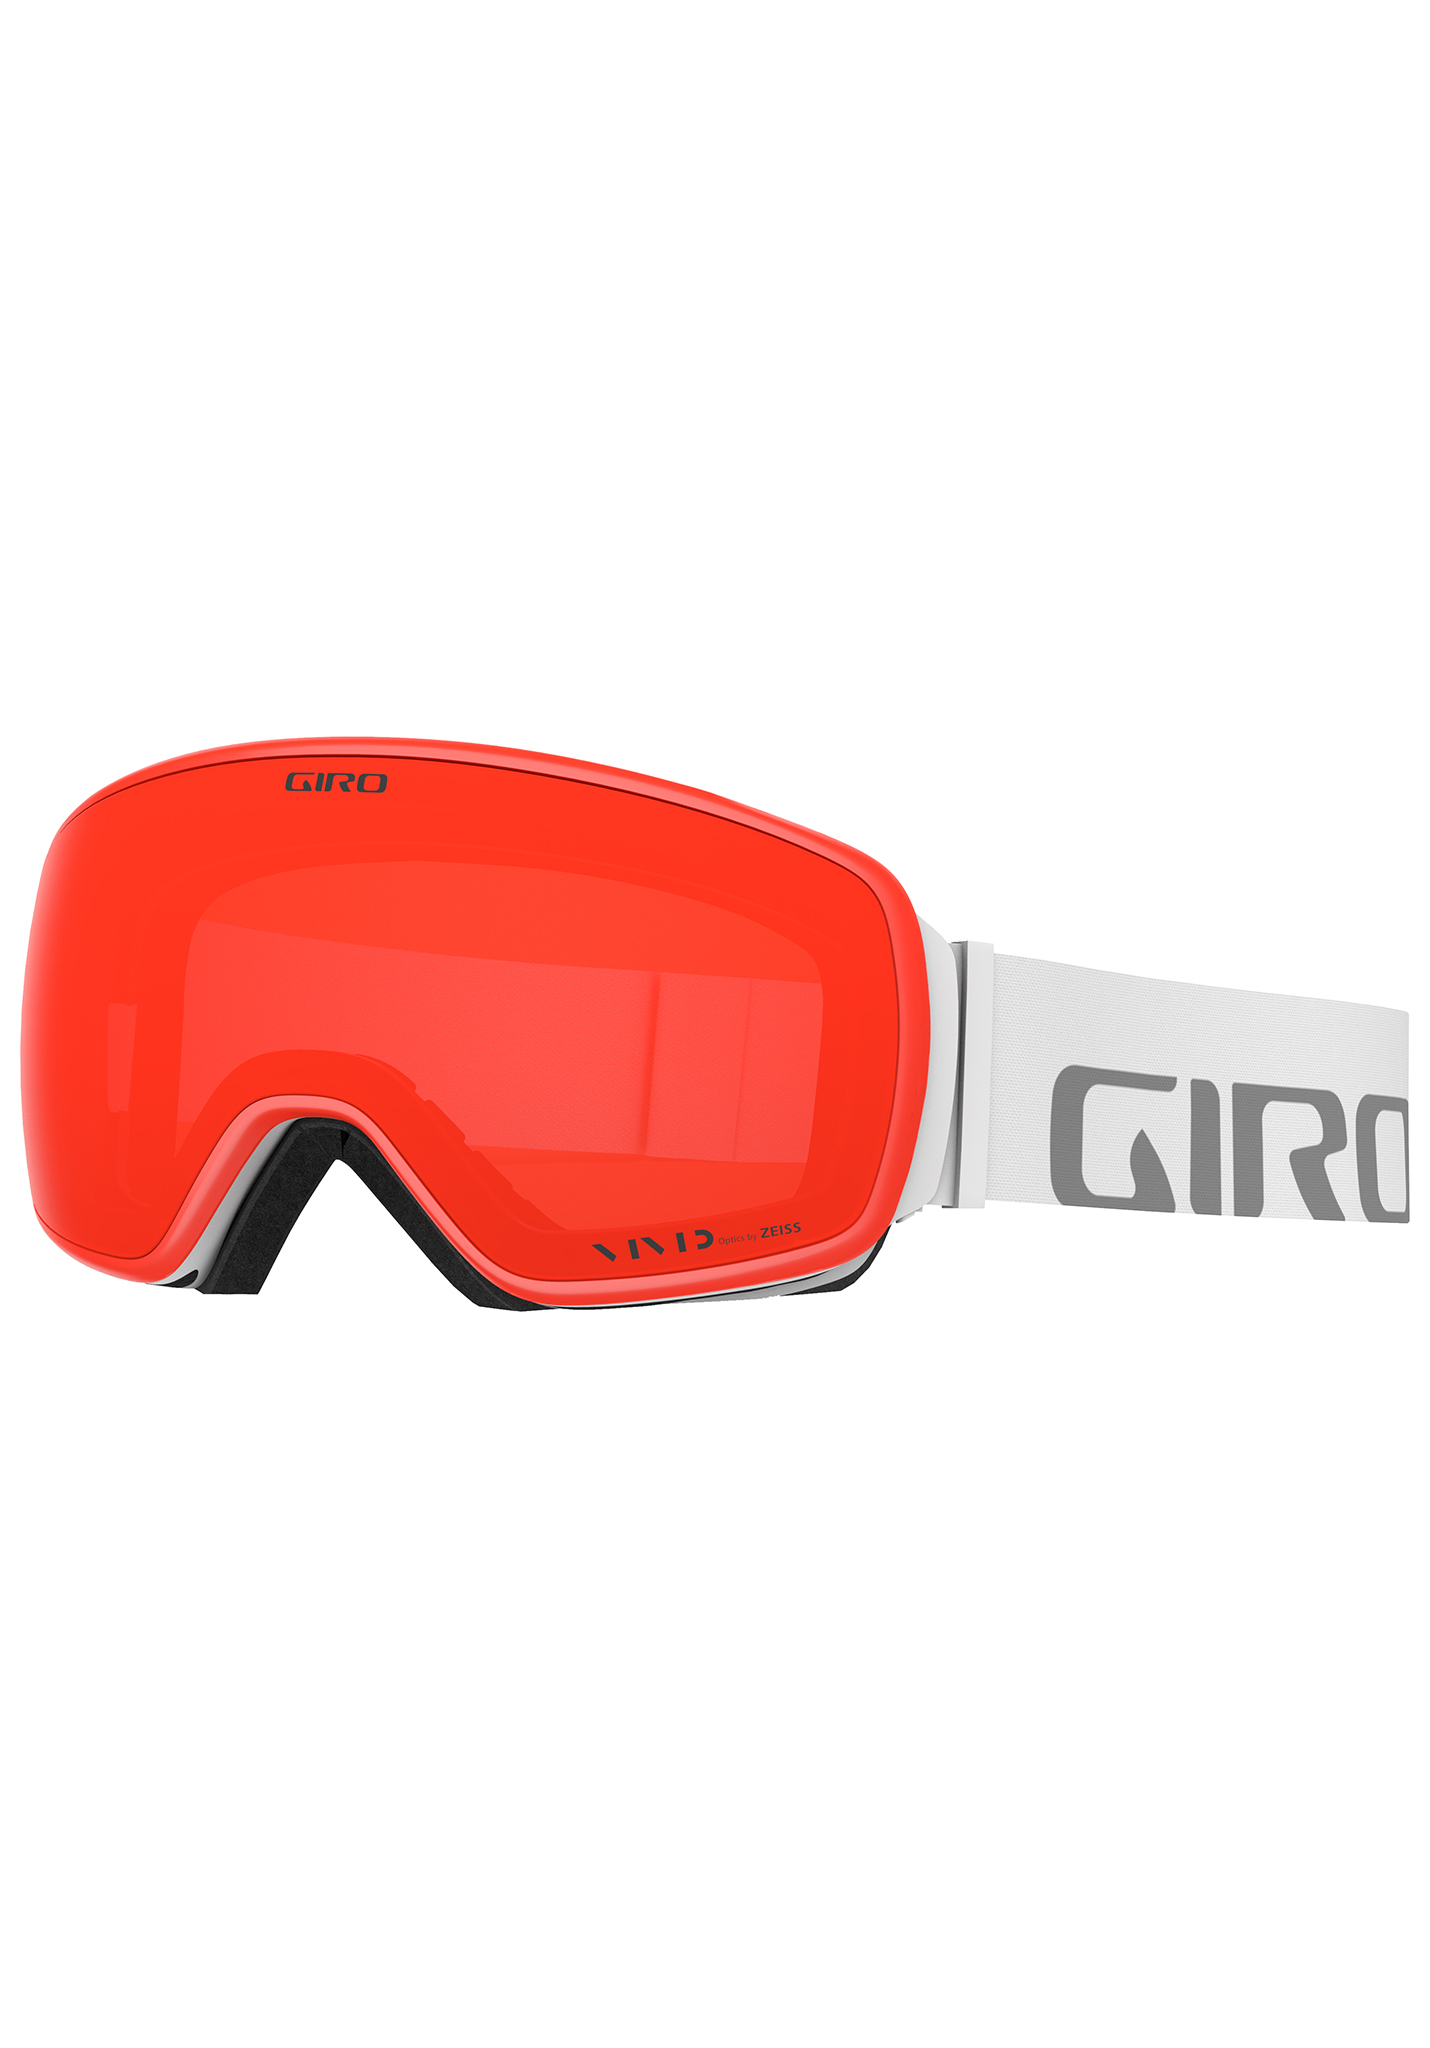 Giro Agent Snowboardbrillen red One Size